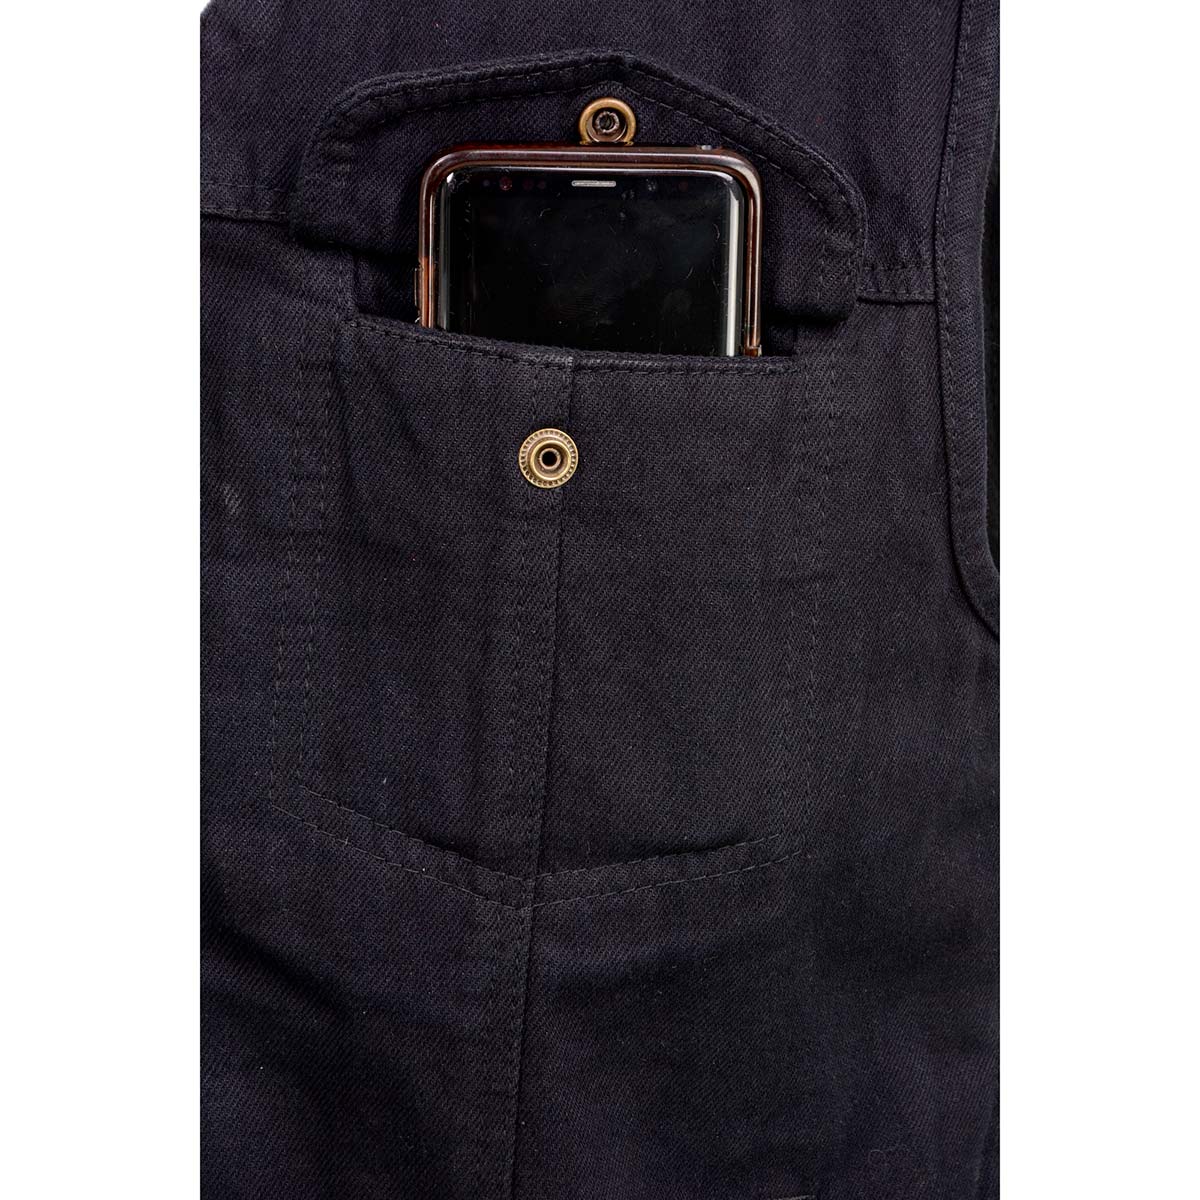 Milwaukee Leather MDM3013 Men's 'Brute' Concealed Snap Black Denim V-Neck Side Lace Club Style Vest w/Hidden Zipper